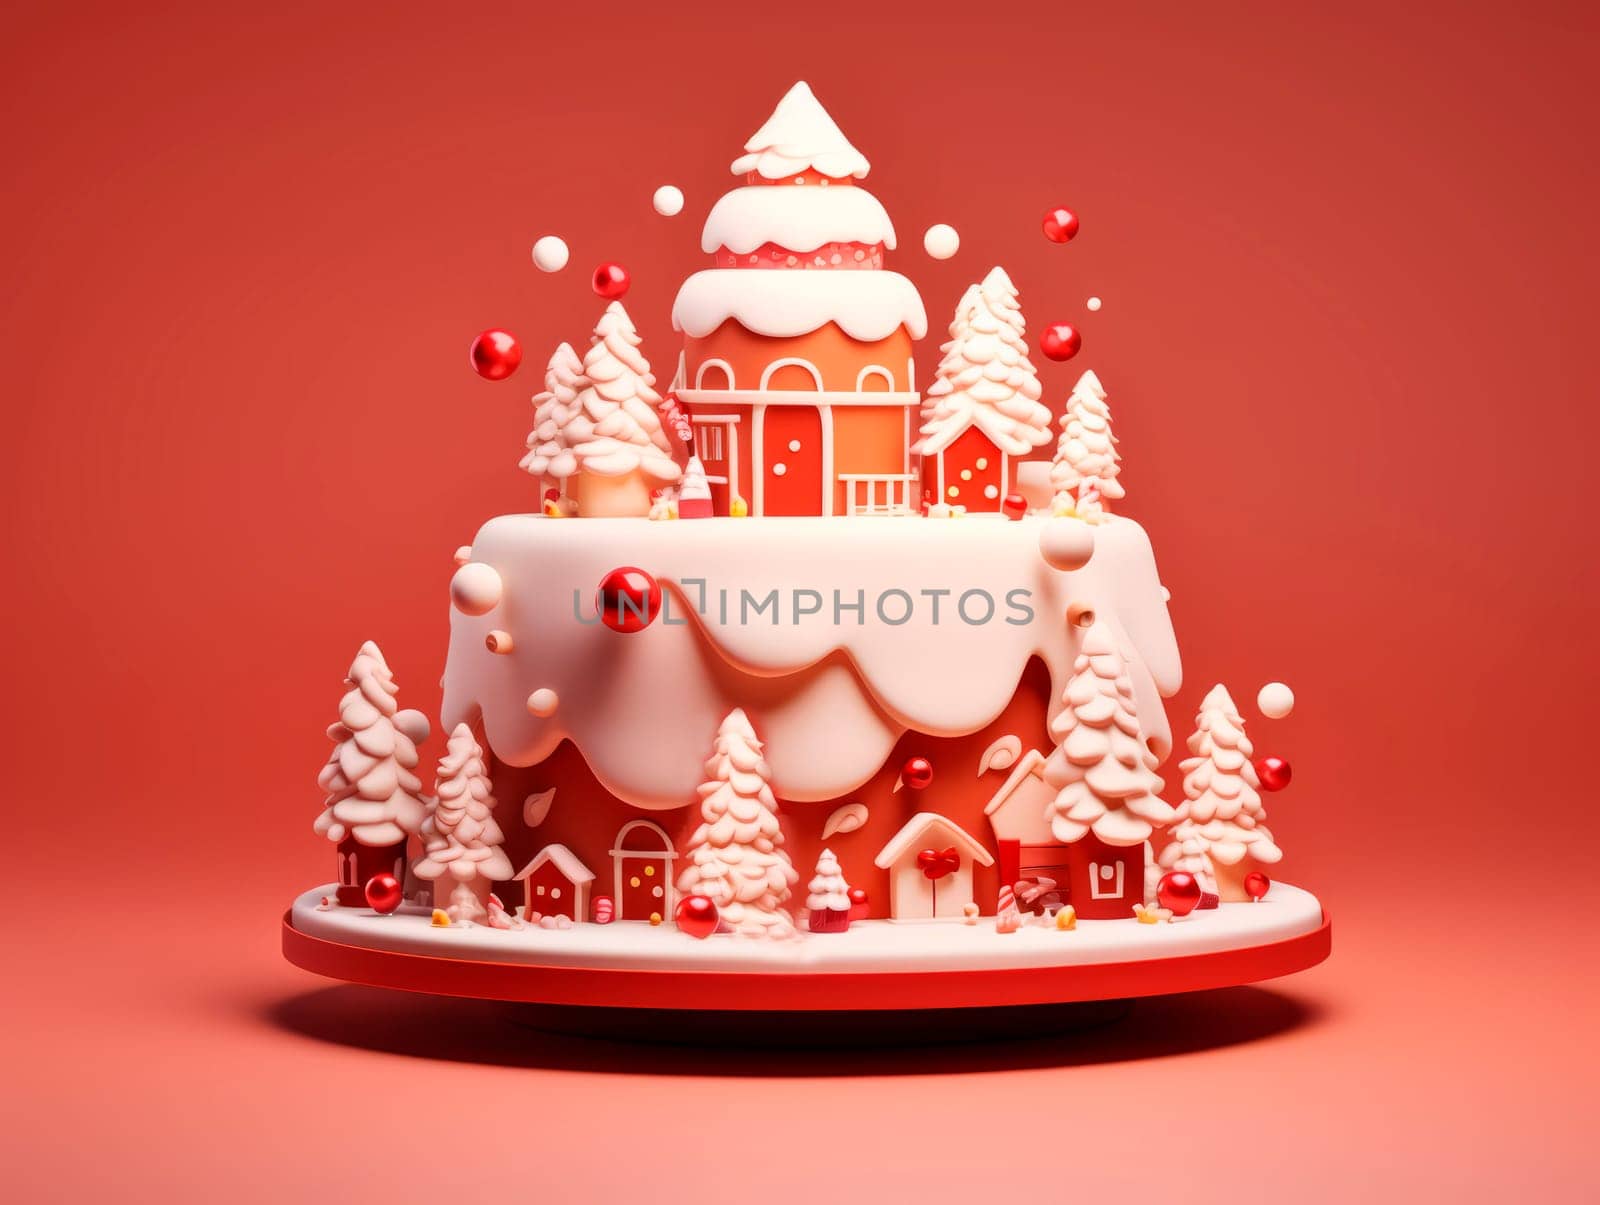 An unusual creative Christmas cake. Christmas dessert.